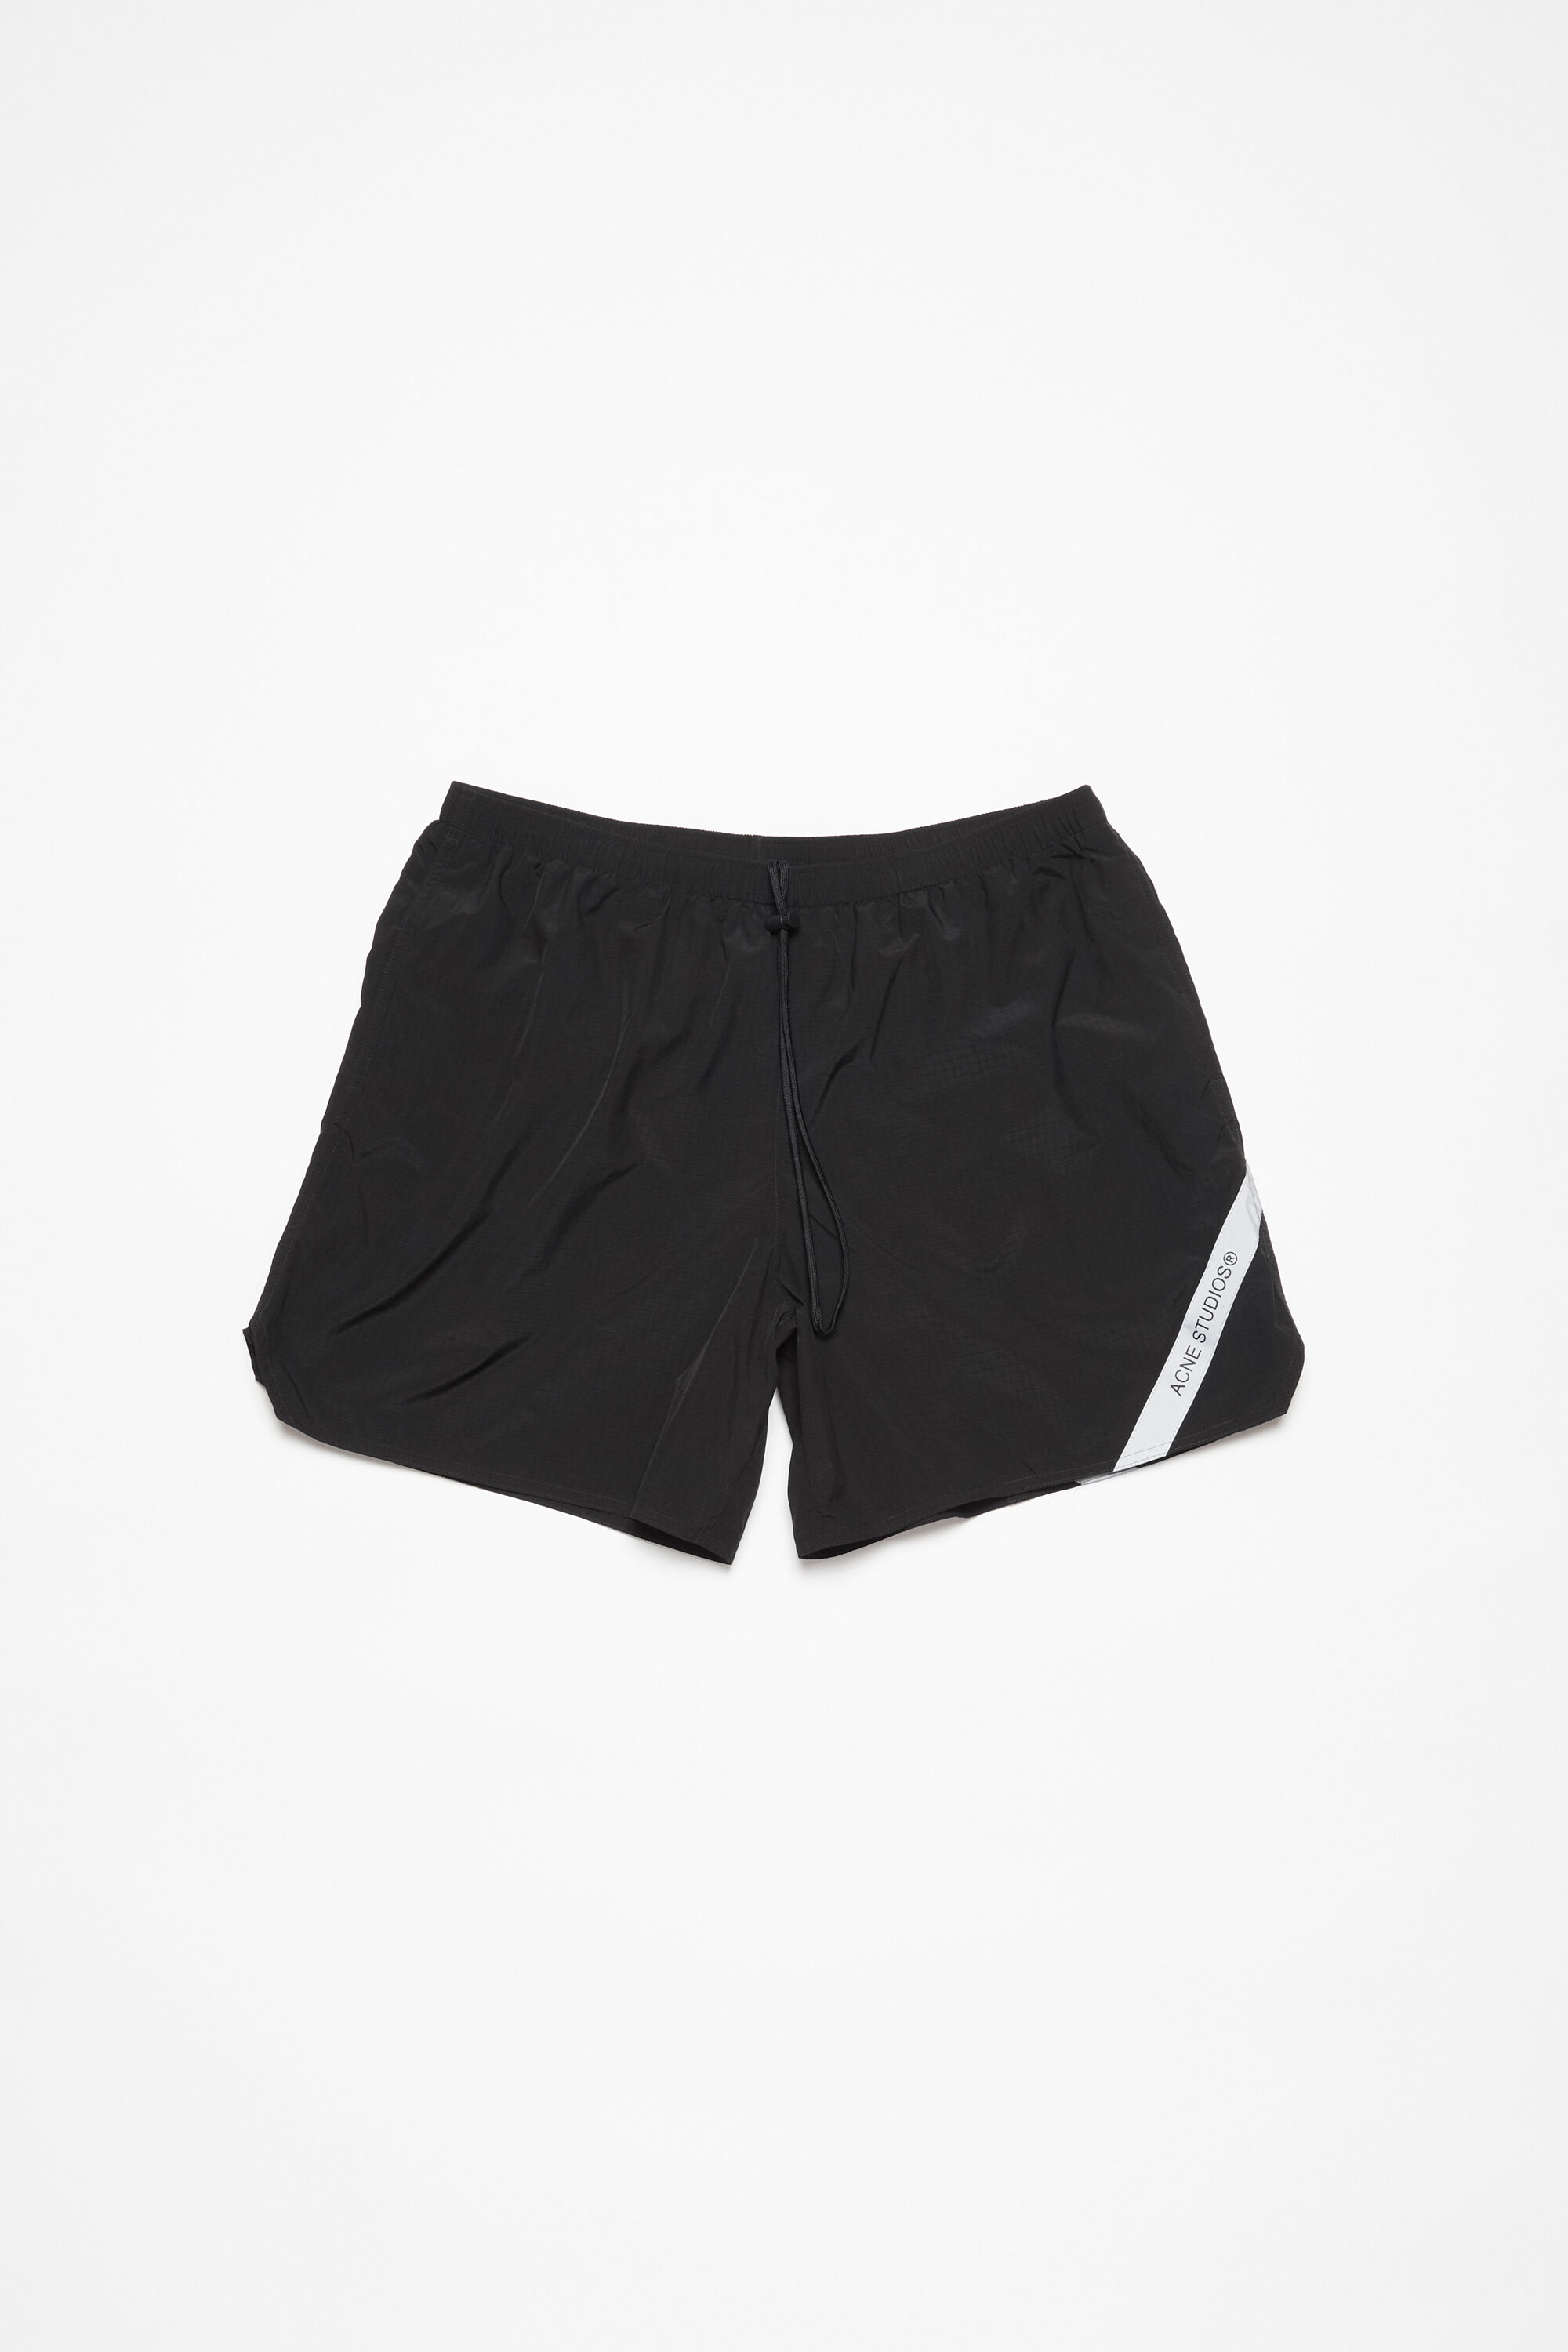 Acne Studios – Men's Shorts